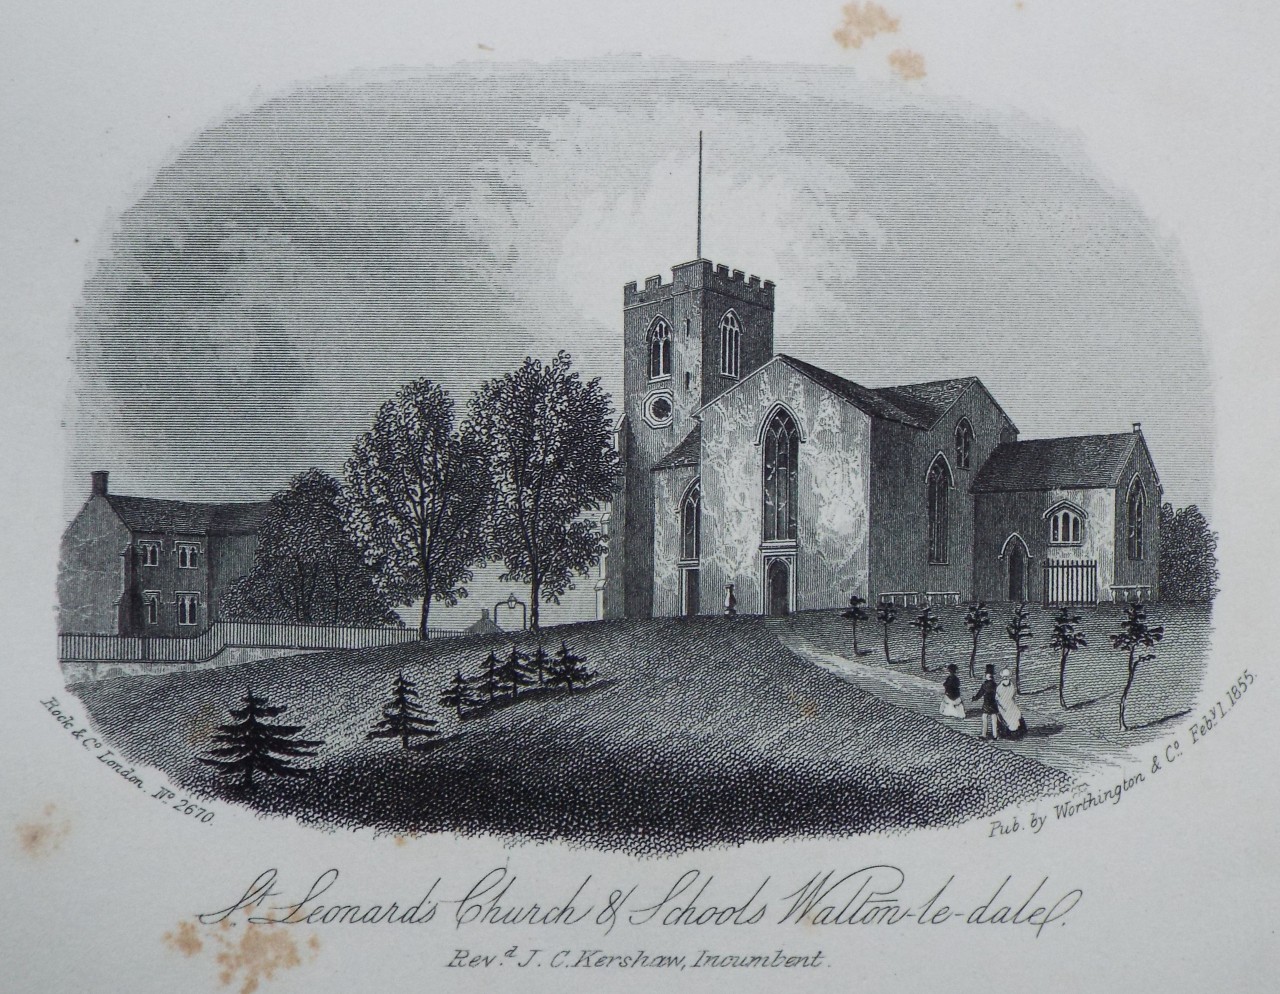 Steel Vignette - St. Leonard's Church & Schools, Walton-le-dale. Rev. J. C. Kershaw Incumbent. - Rock